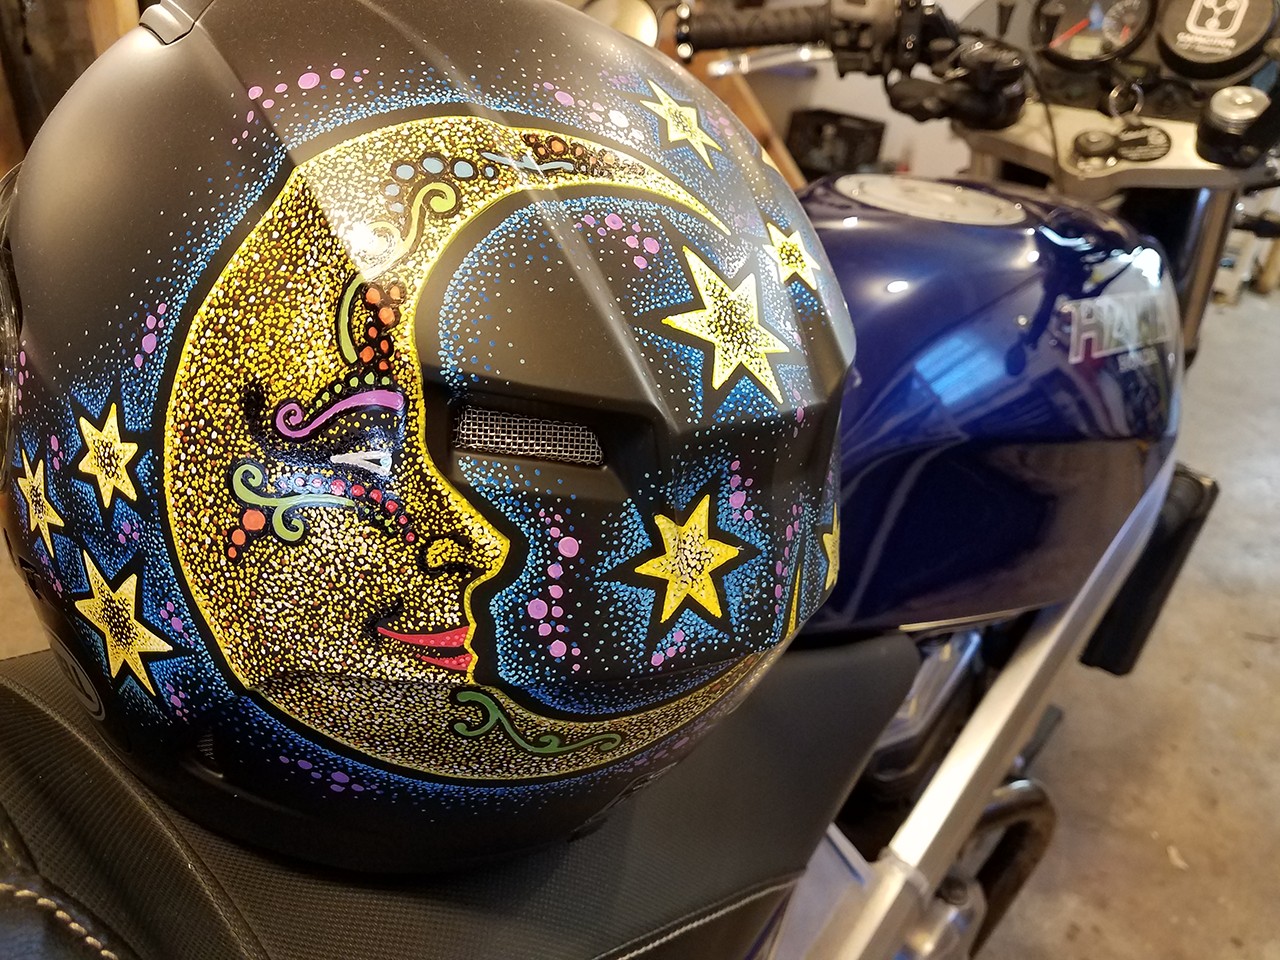 Motorcycle Helmet Painting: Custom Looks For Riding/Racing